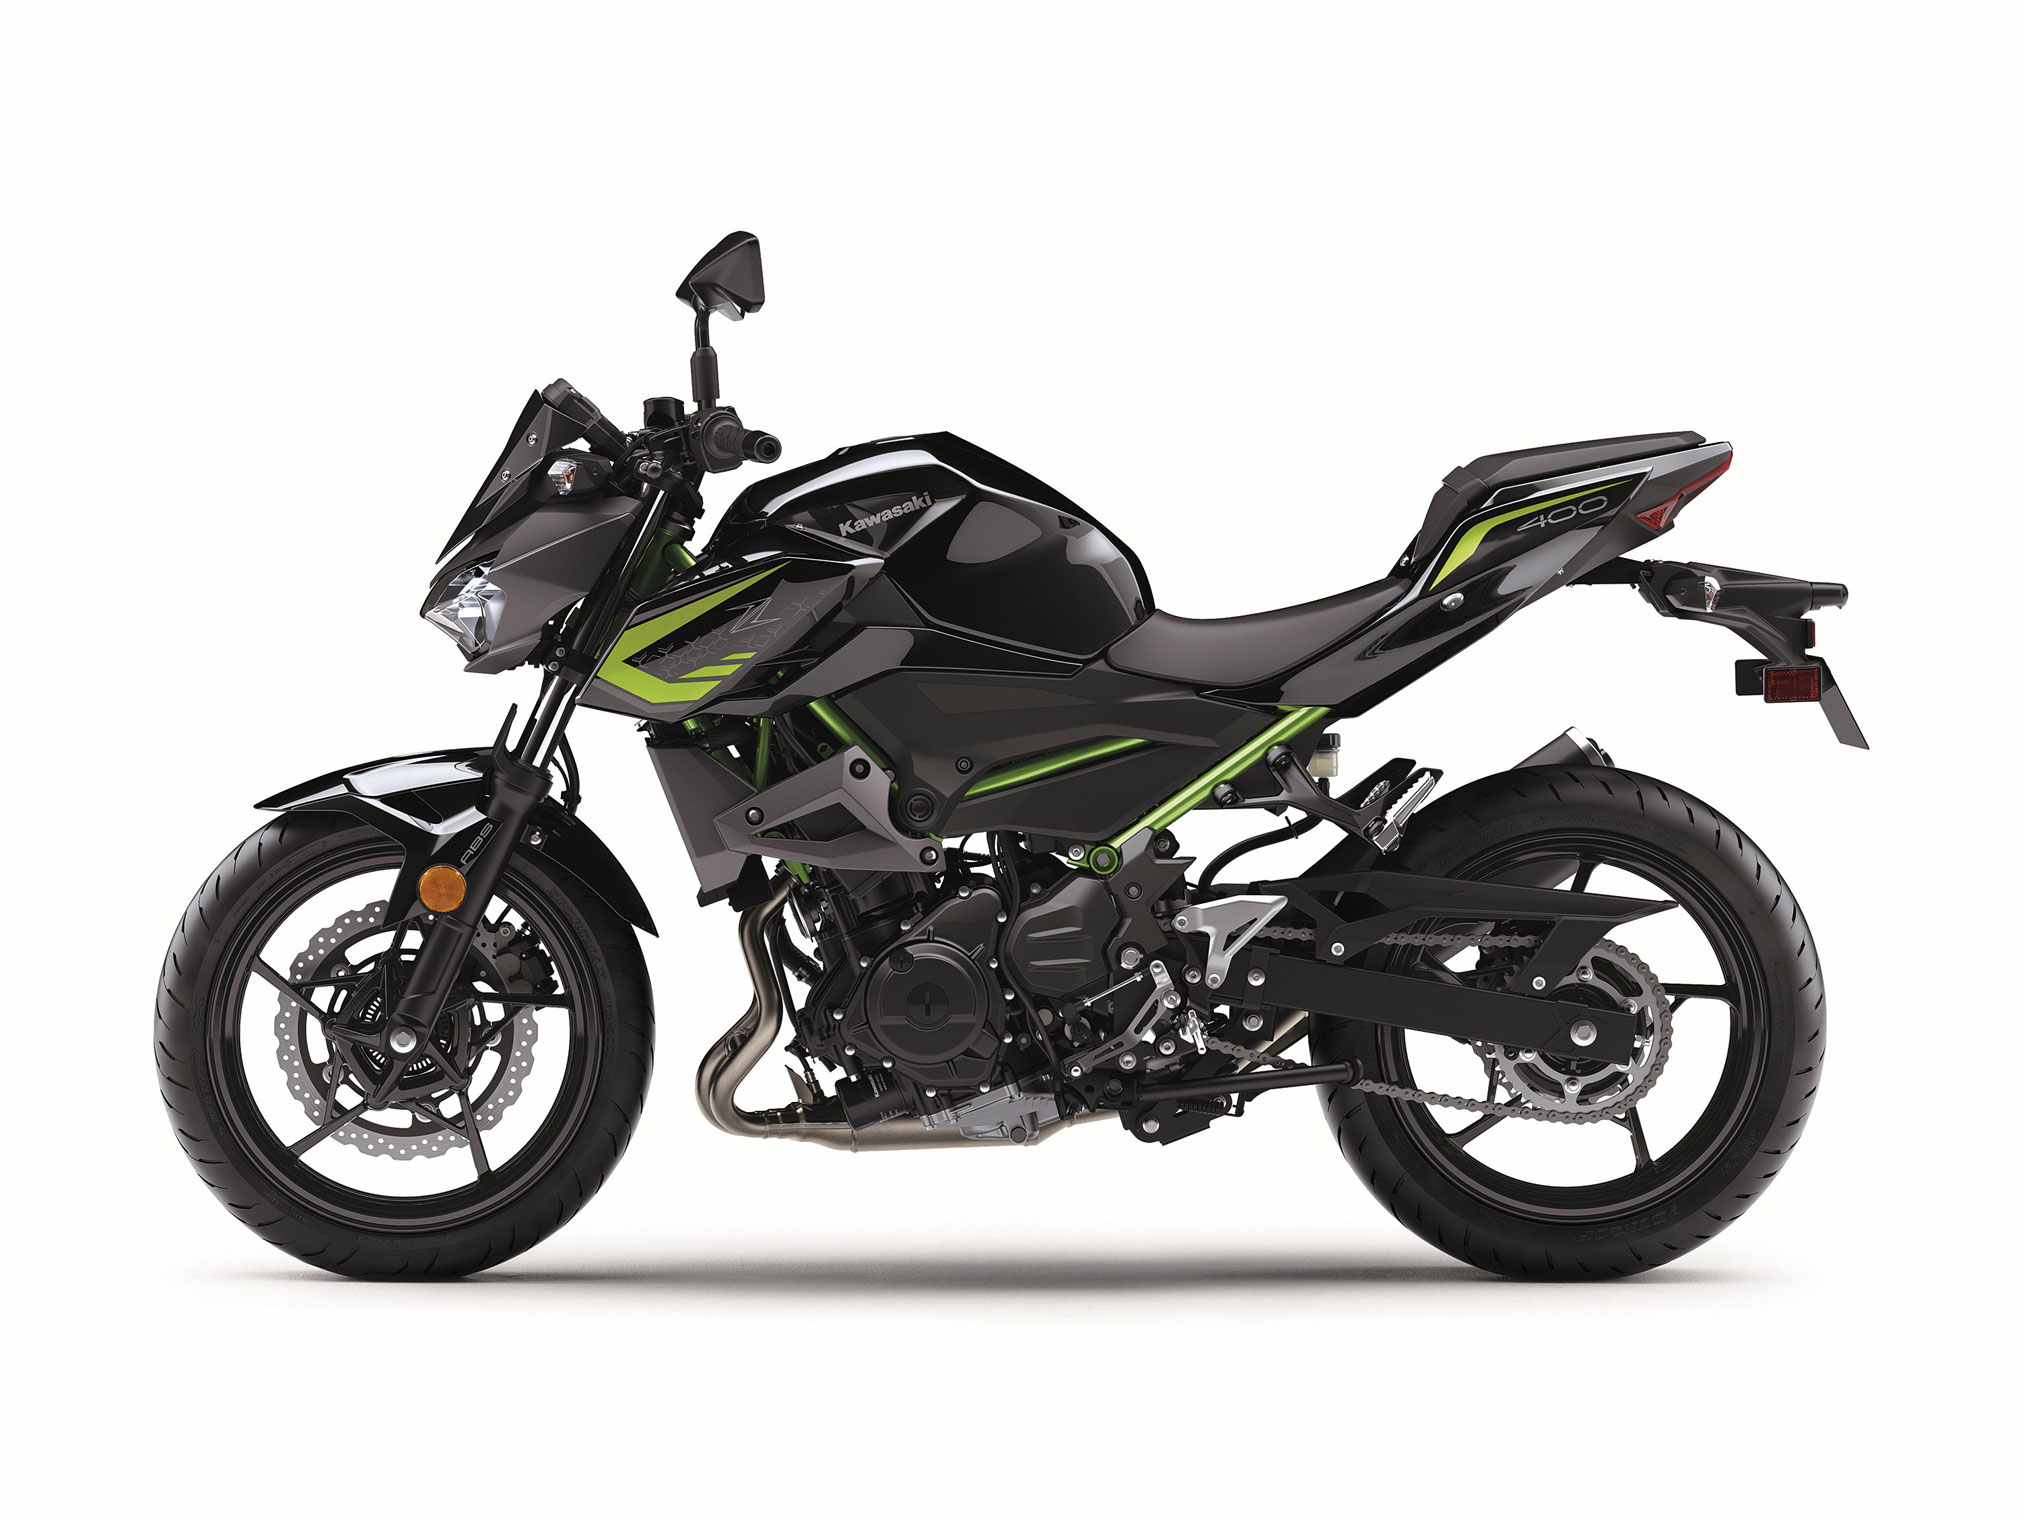 2020 Kawasaki Z400 ABS Guide • Total Motorcycle